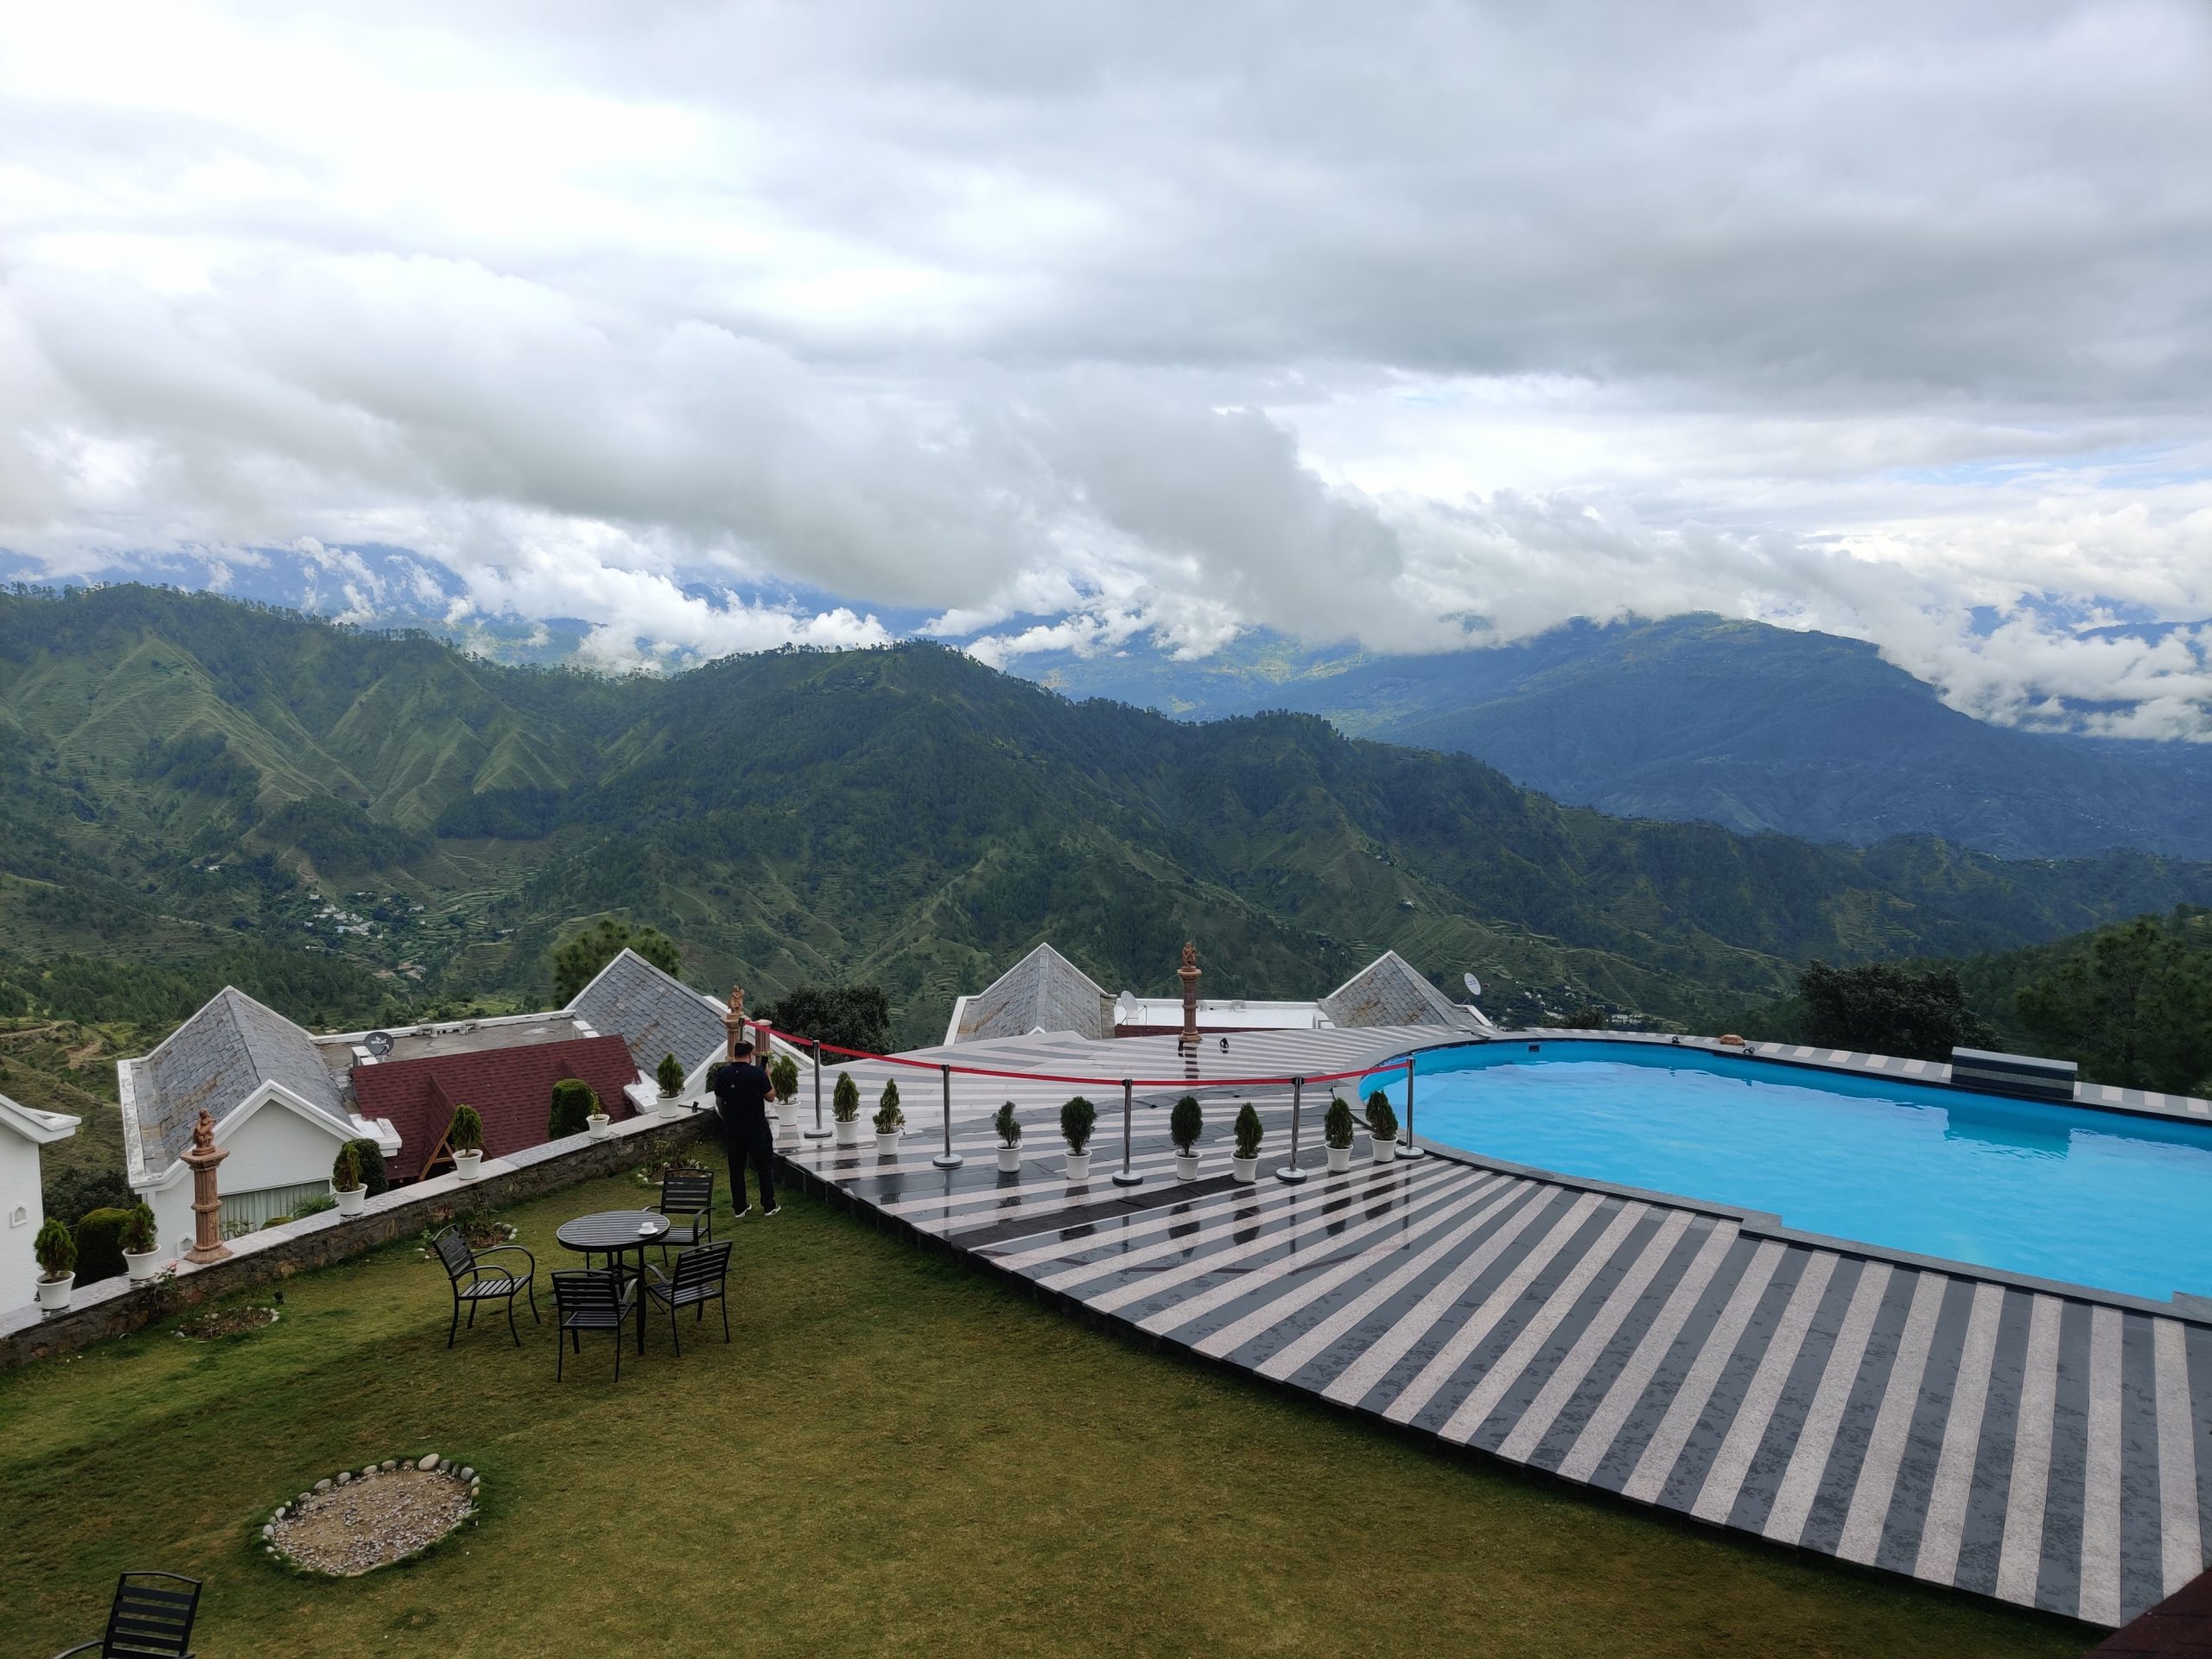 Best places in Jim Corbett for celebrate Dussehra - Vatsyayana Resorts